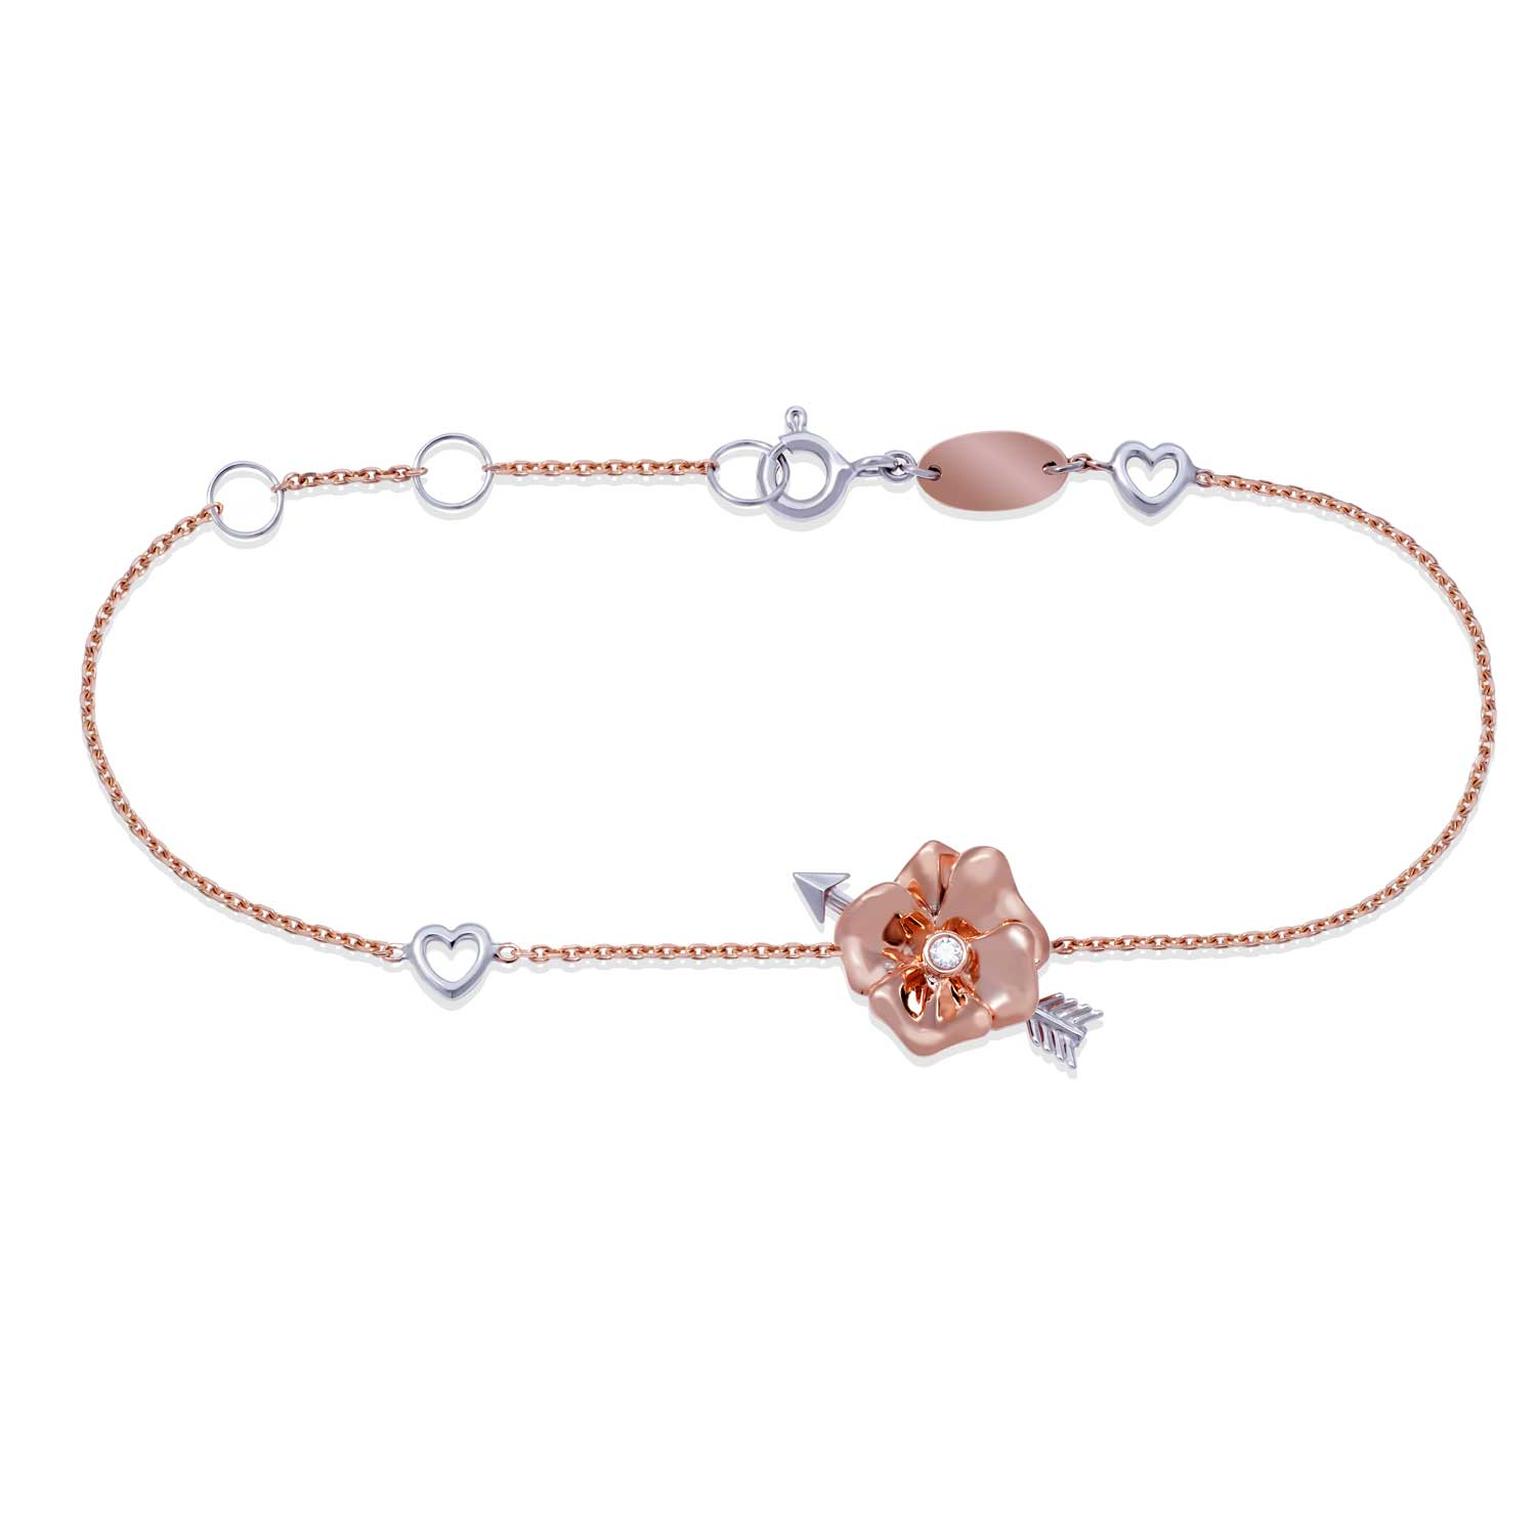 Stenzhorn Cupid's Potion rose gold and diamond bracelet